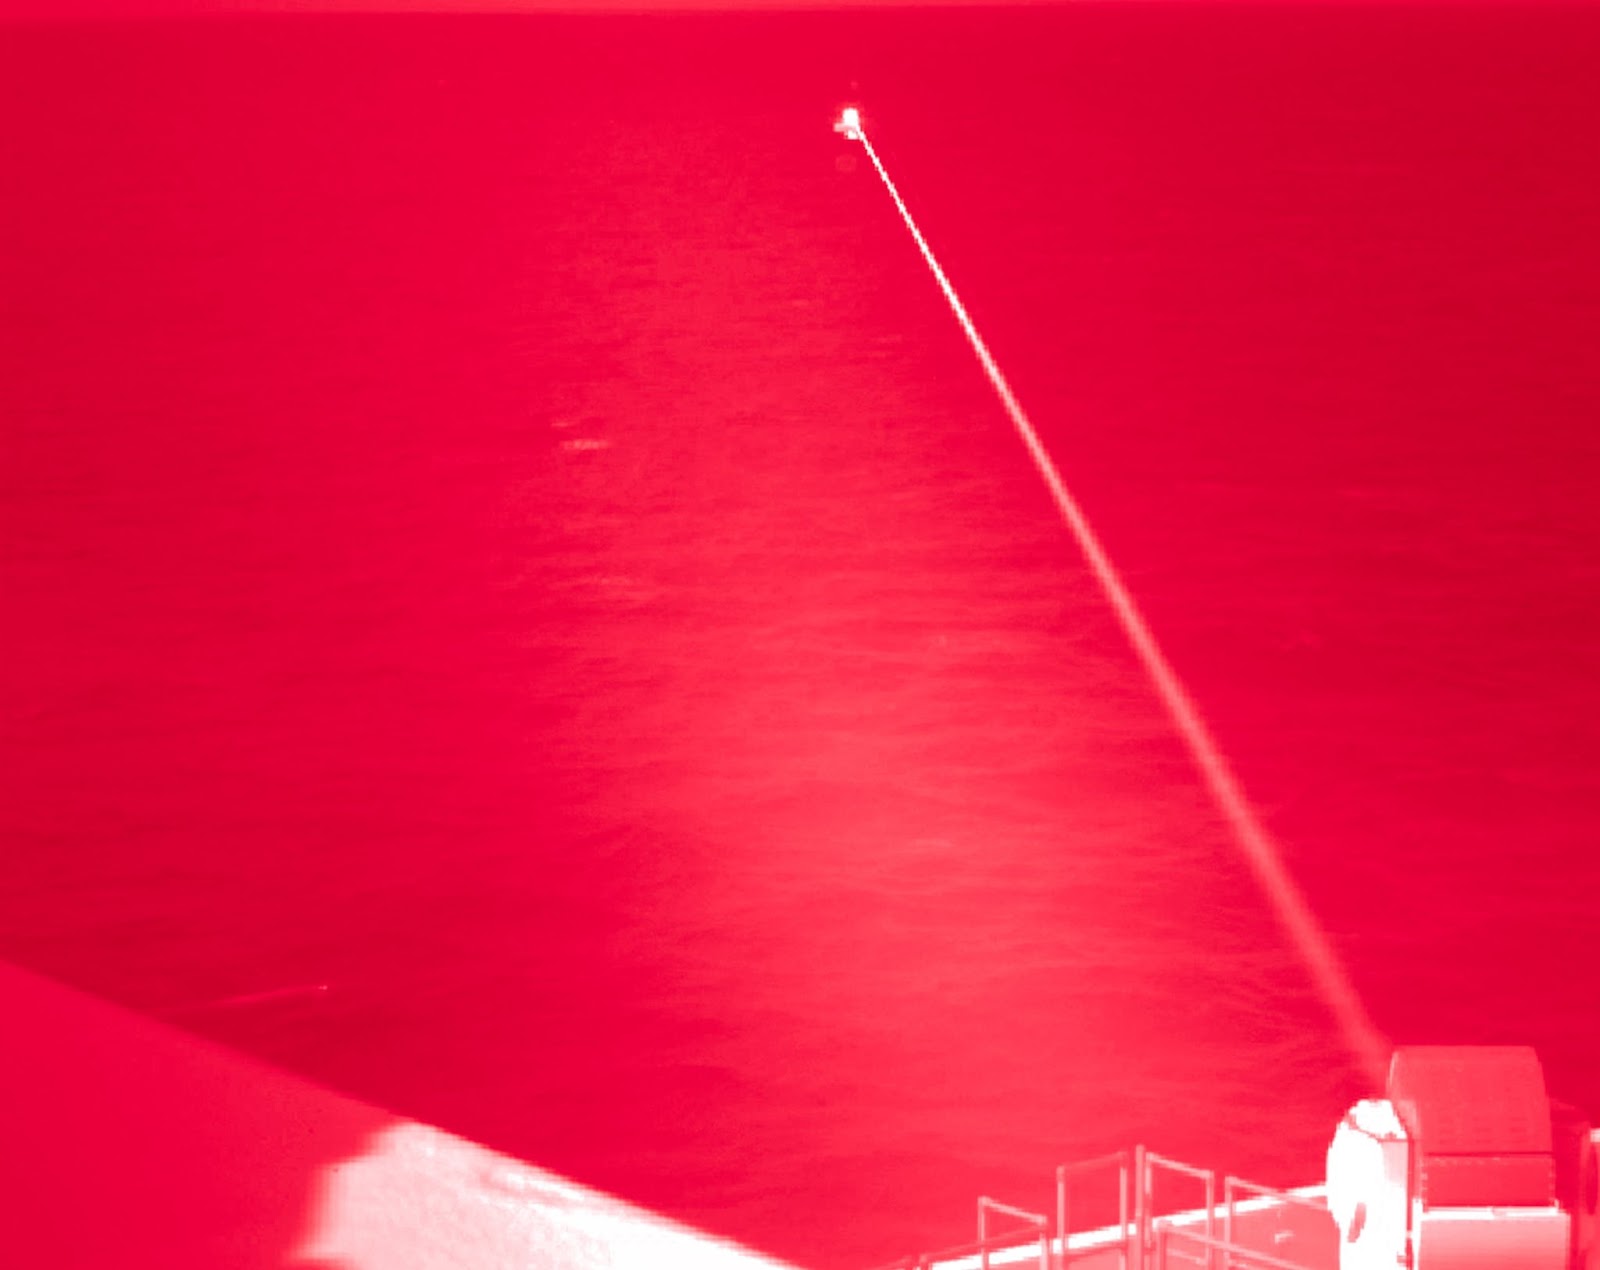 USS Portland 에서 고 에너지 레이저 시스템을 사용하여 표적을 쏘고 있는 모습